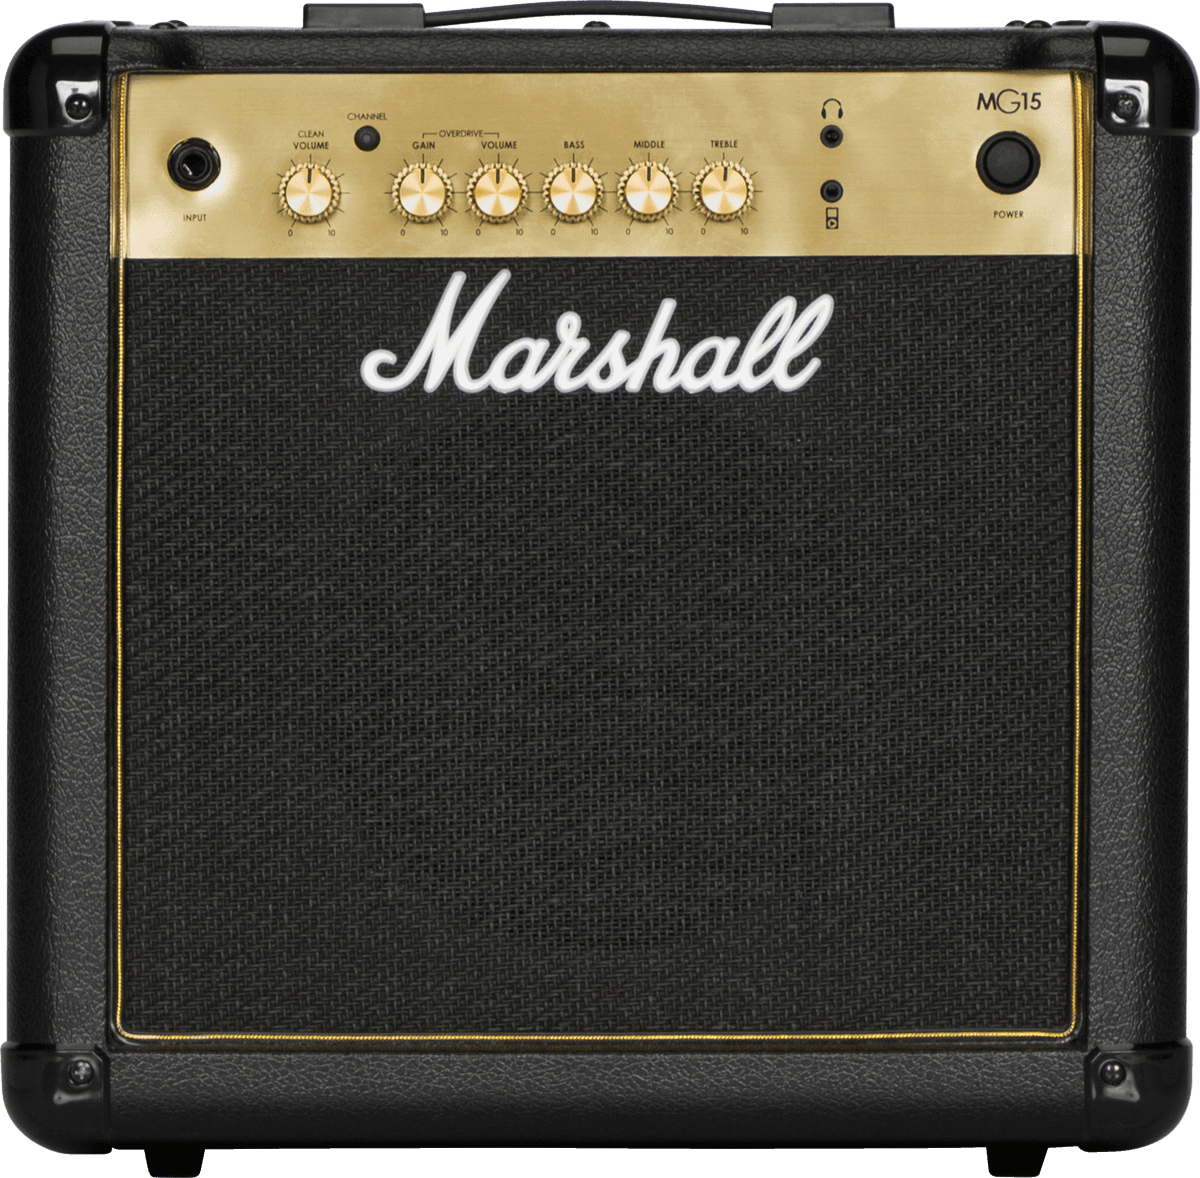 Marshall Mg15g 15w - Combo amplificador para guitarra eléctrica - Variation 1